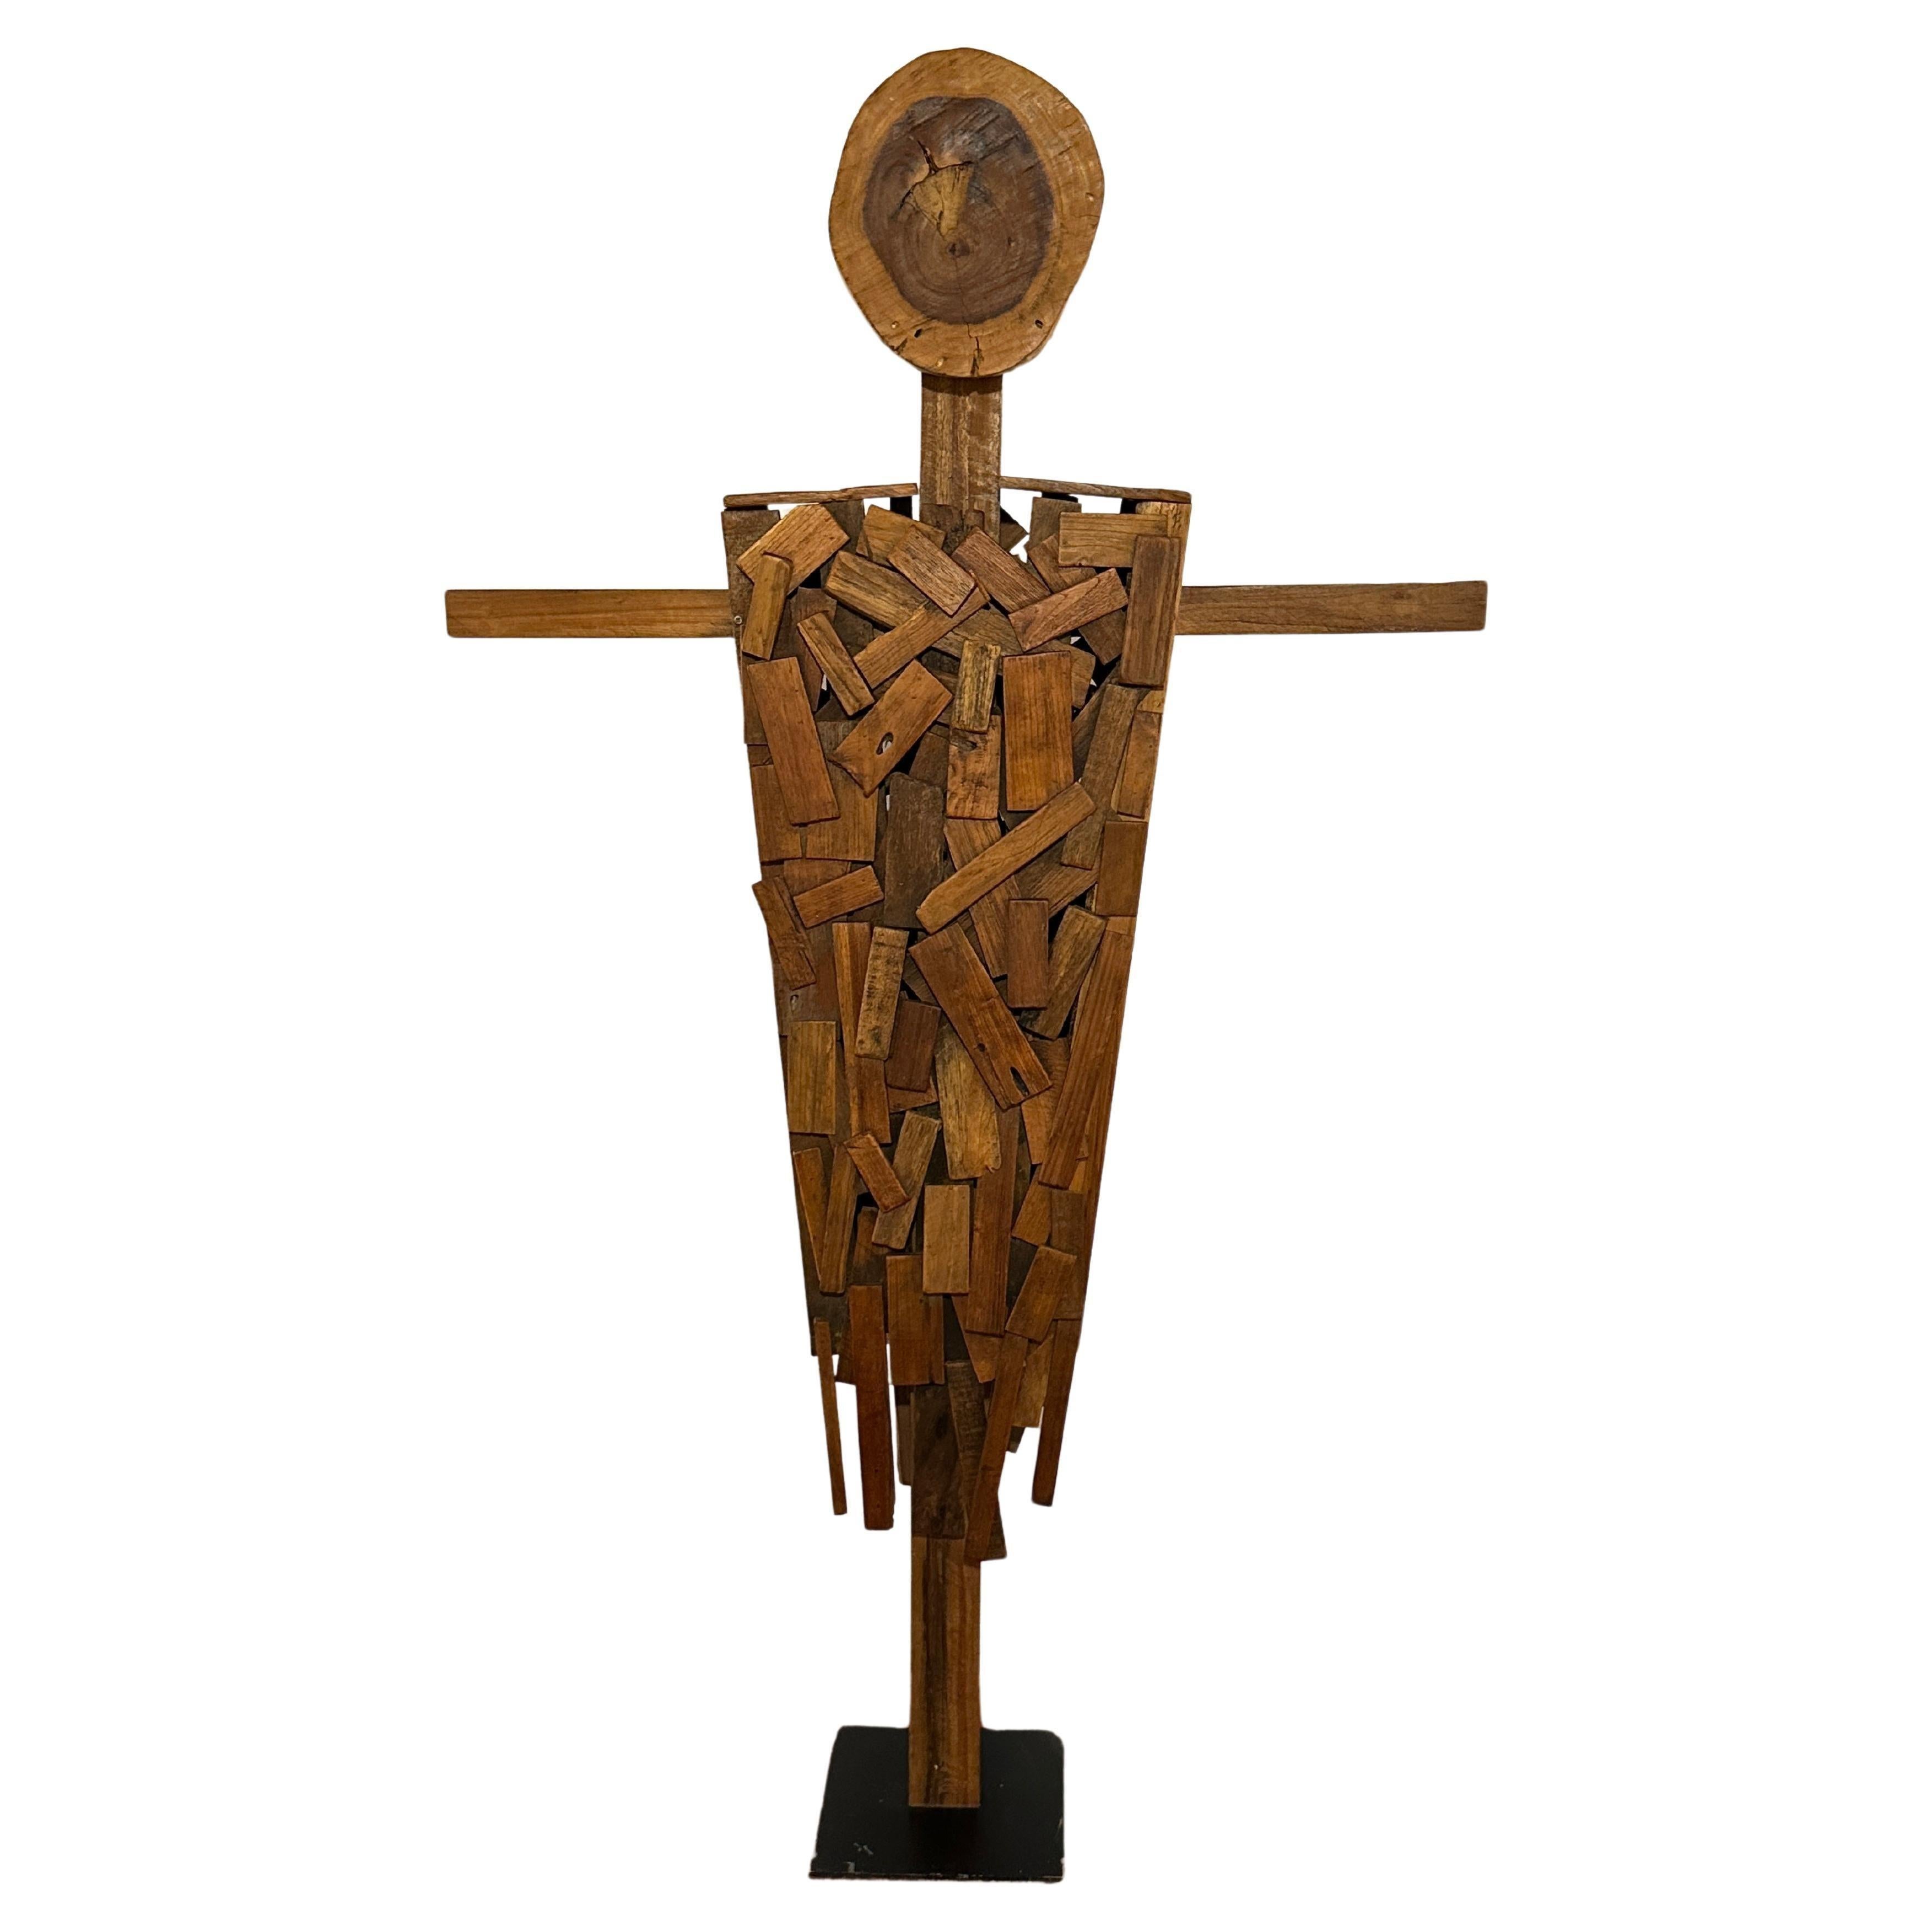 Unknown Figurative Sculpture - Brutalist Wood Sculpture